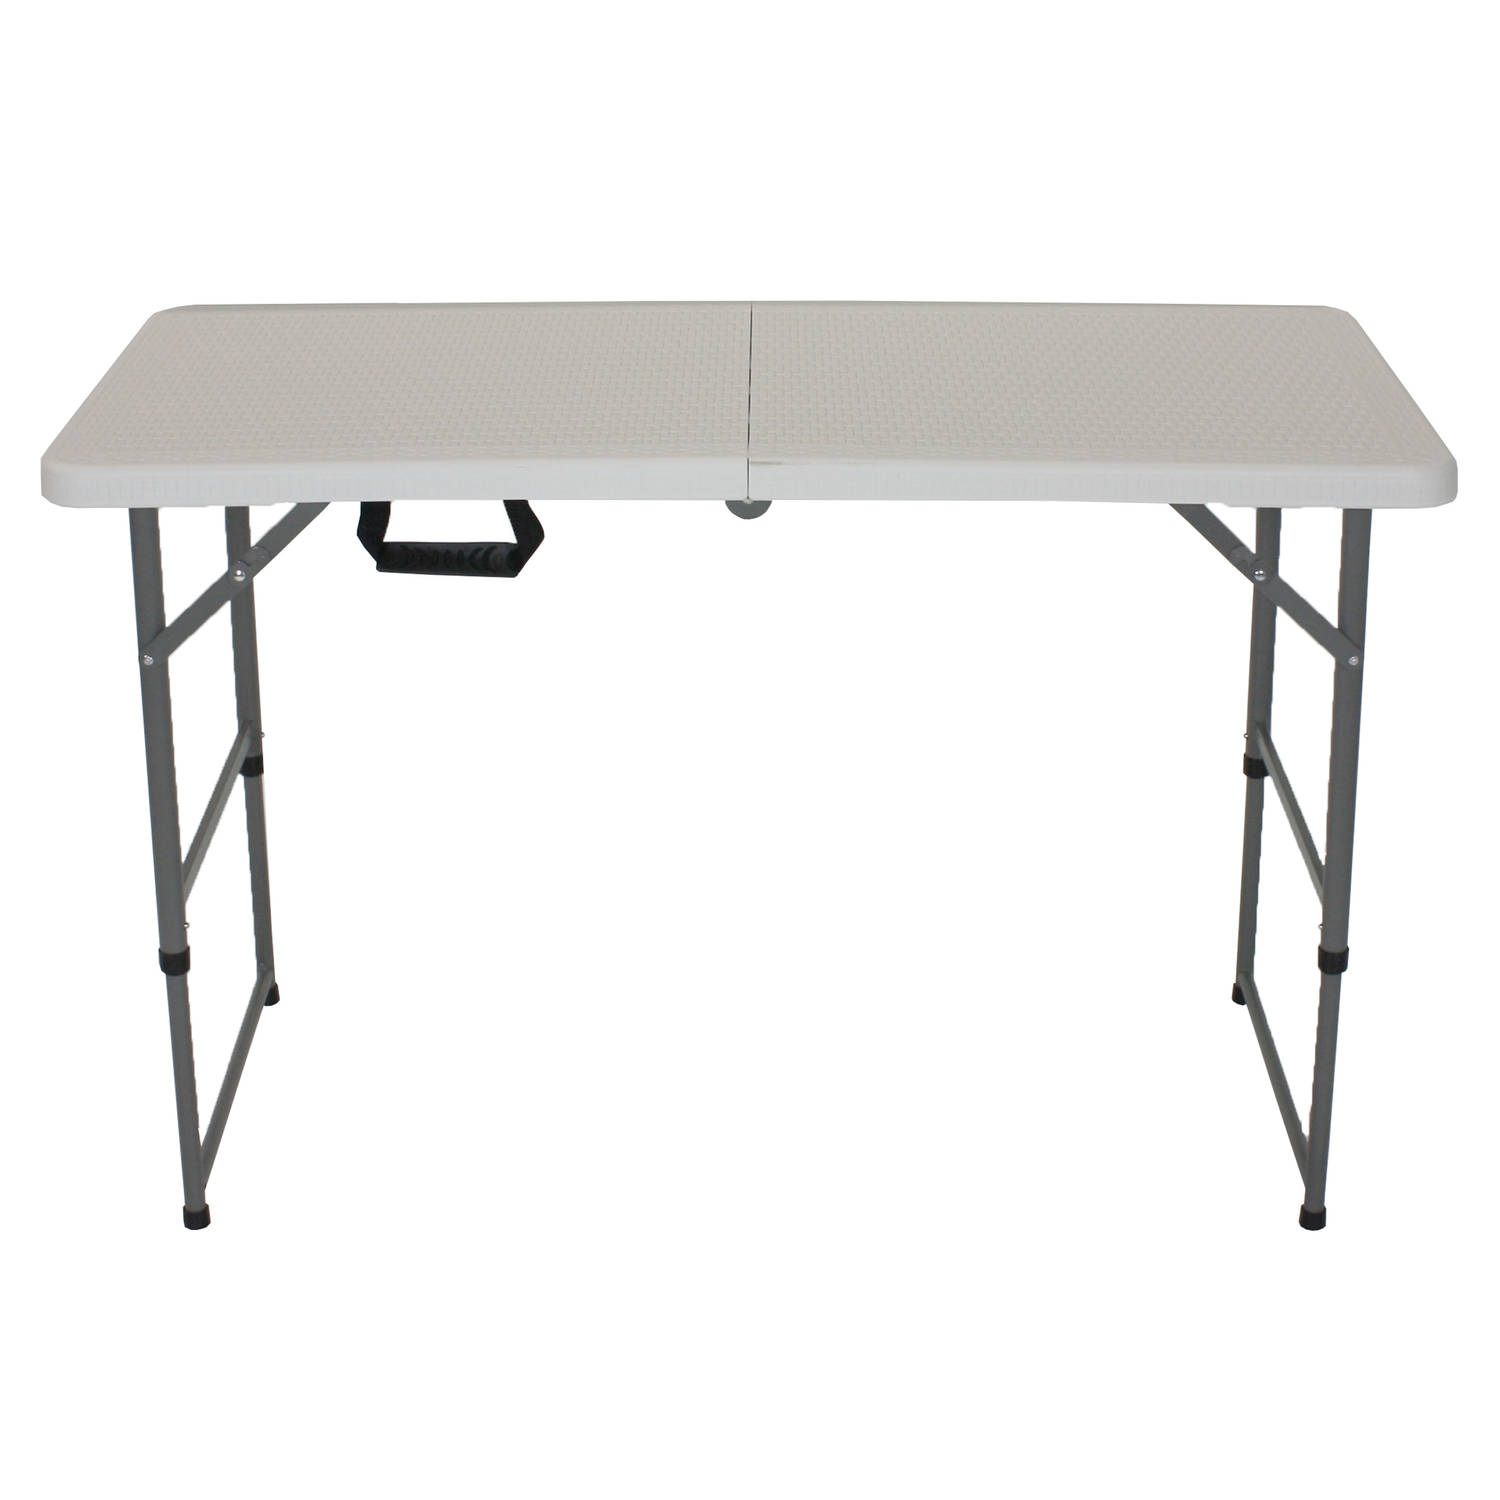 Lowander inklapbare tafel 120x60 cm - Klaptafel | Vouwtafel | Campingtafel - Extra stabiel - Wit